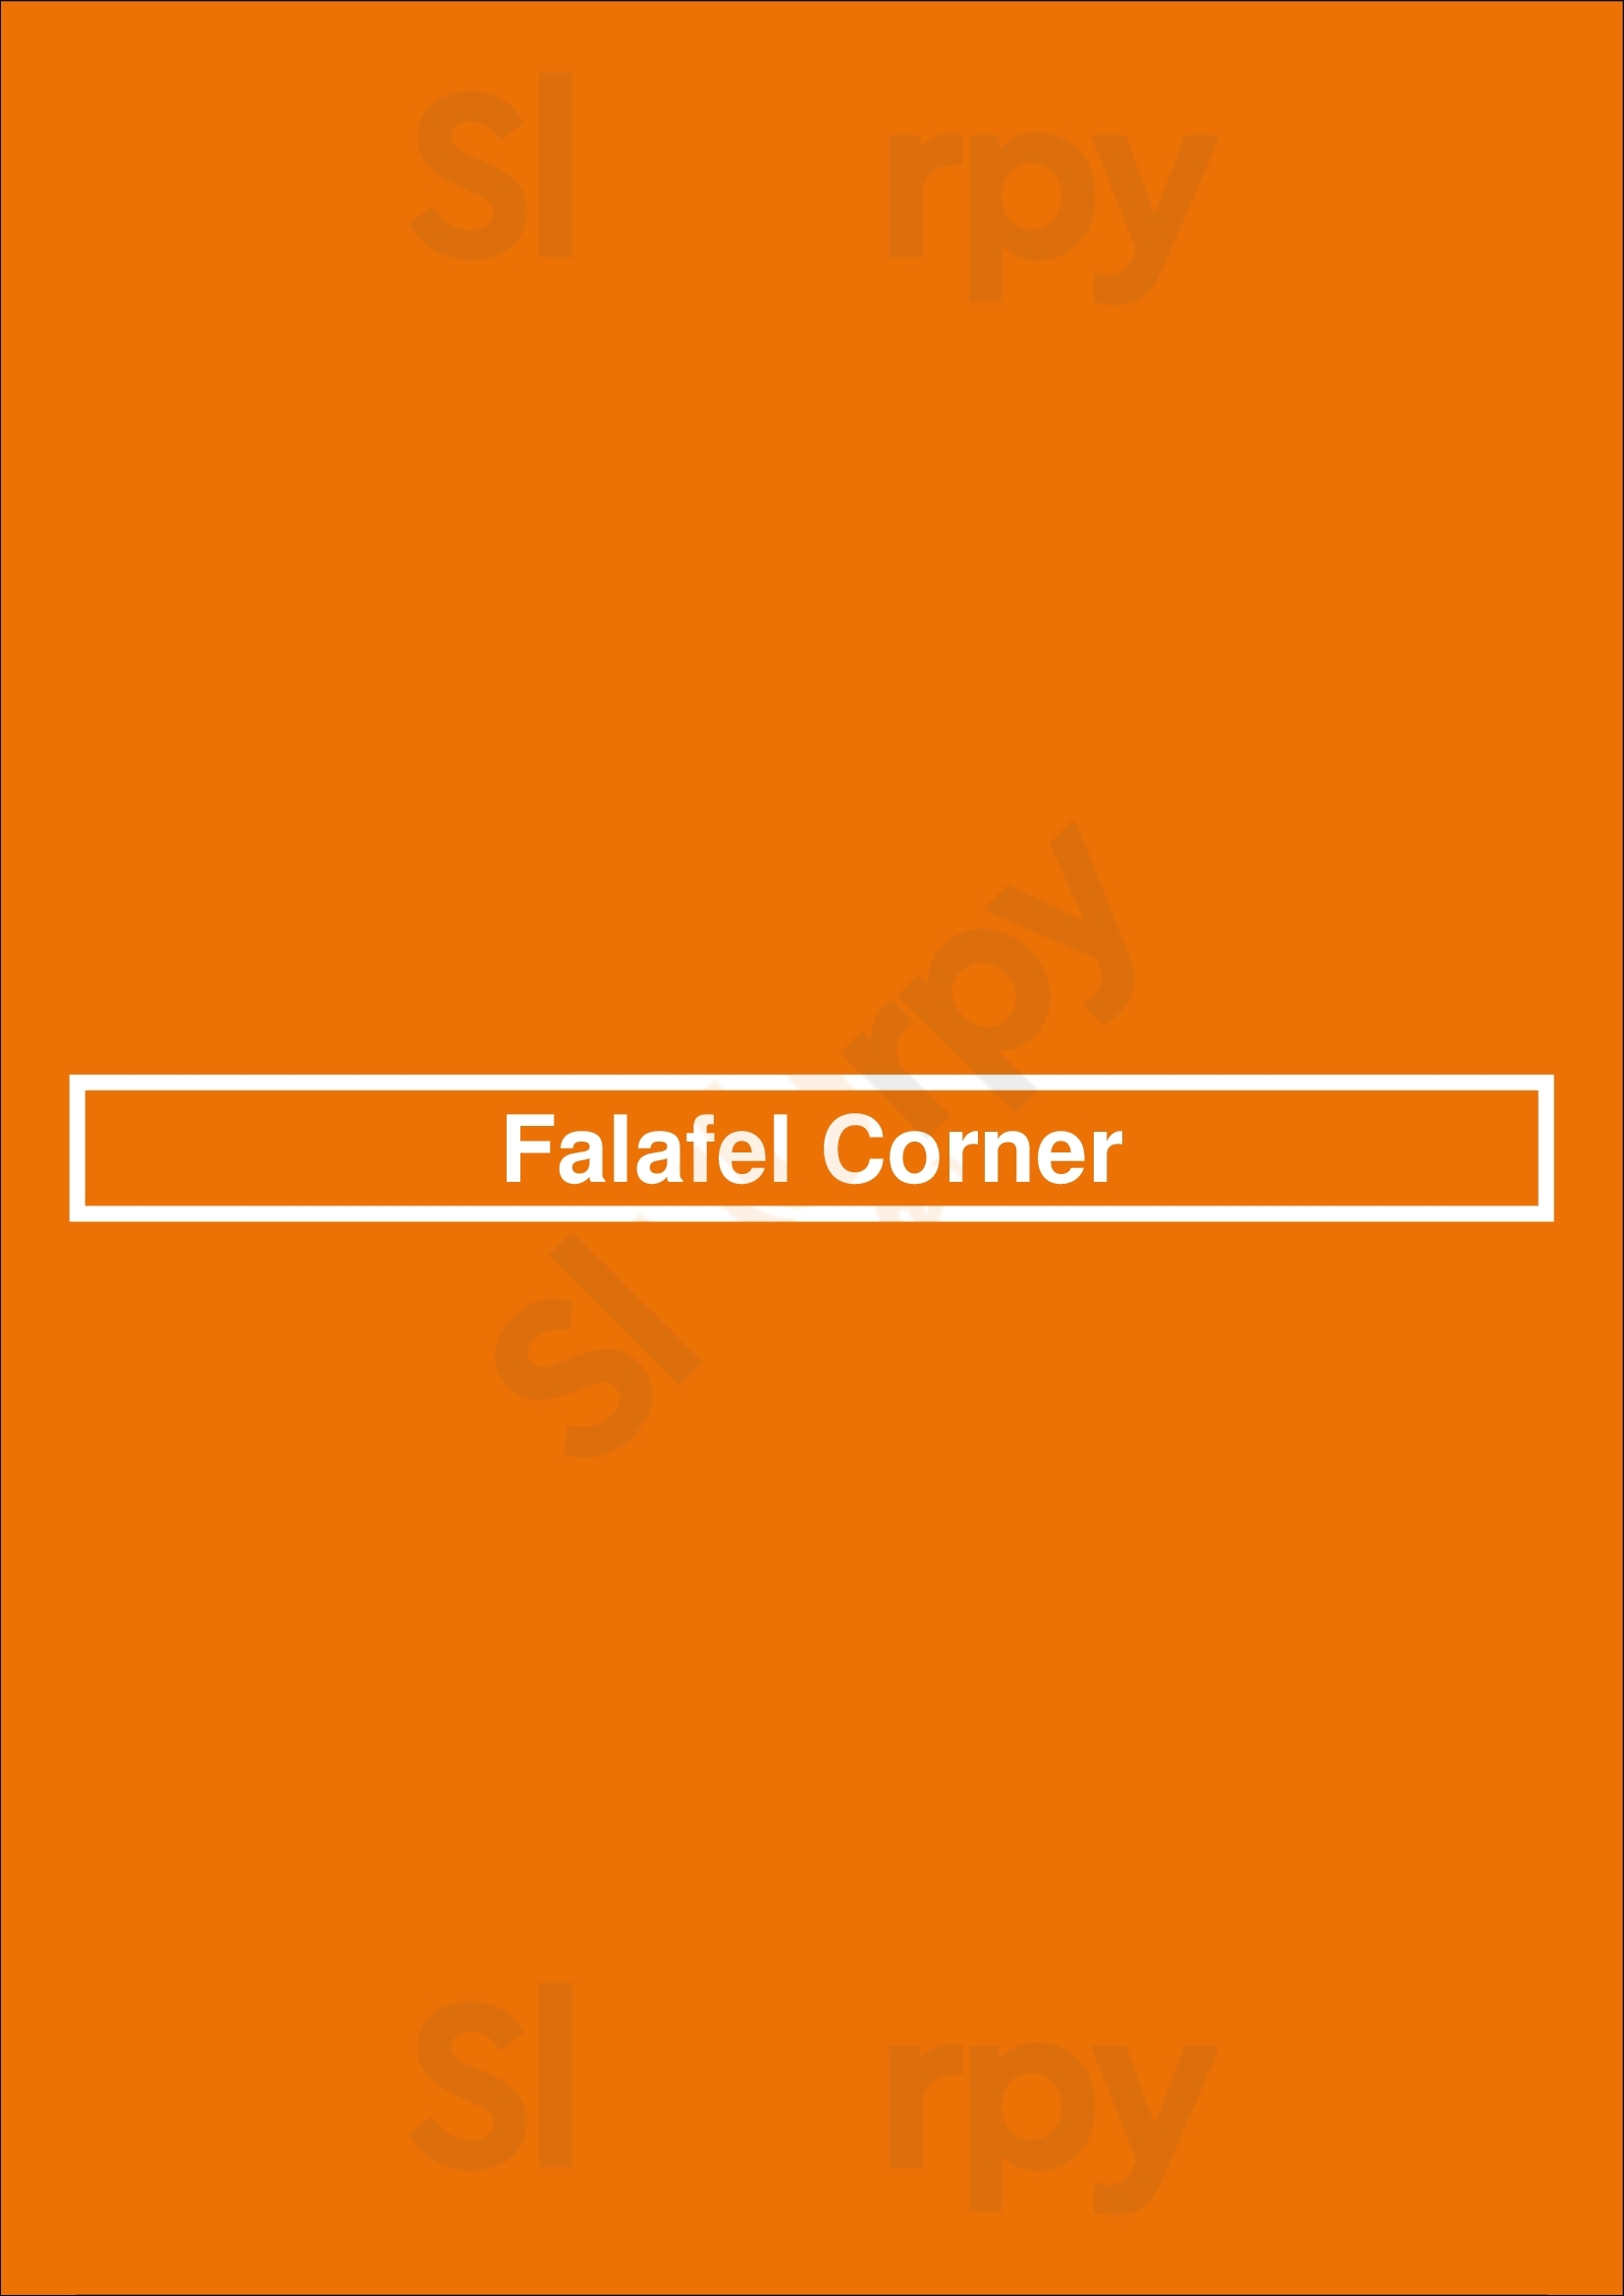 Falafel Corner Sacramento Menu - 1